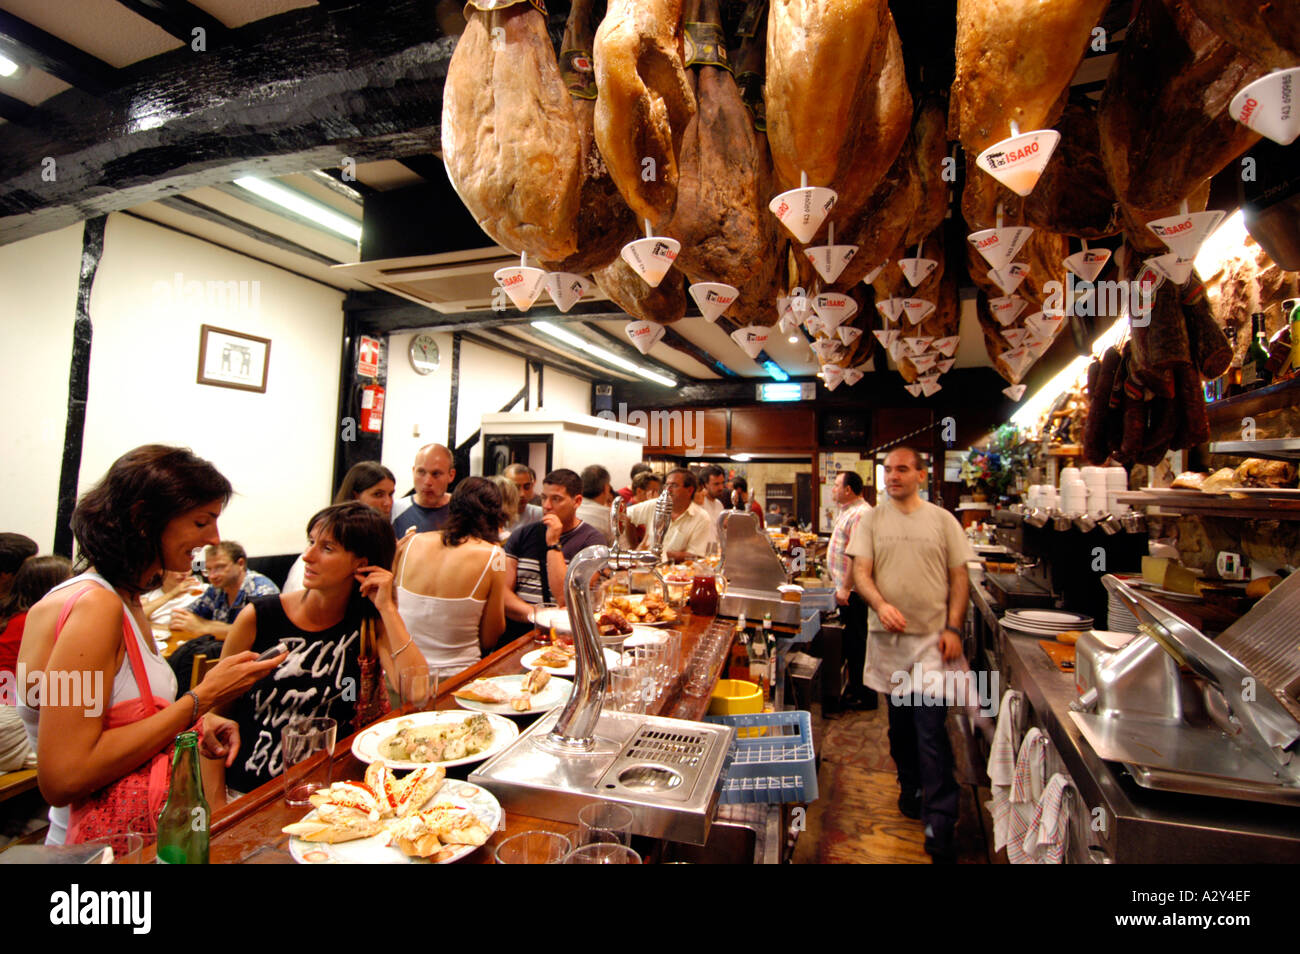 Eating tapas at a bar in San Sebastian, Spain Stock Photo - Alamy